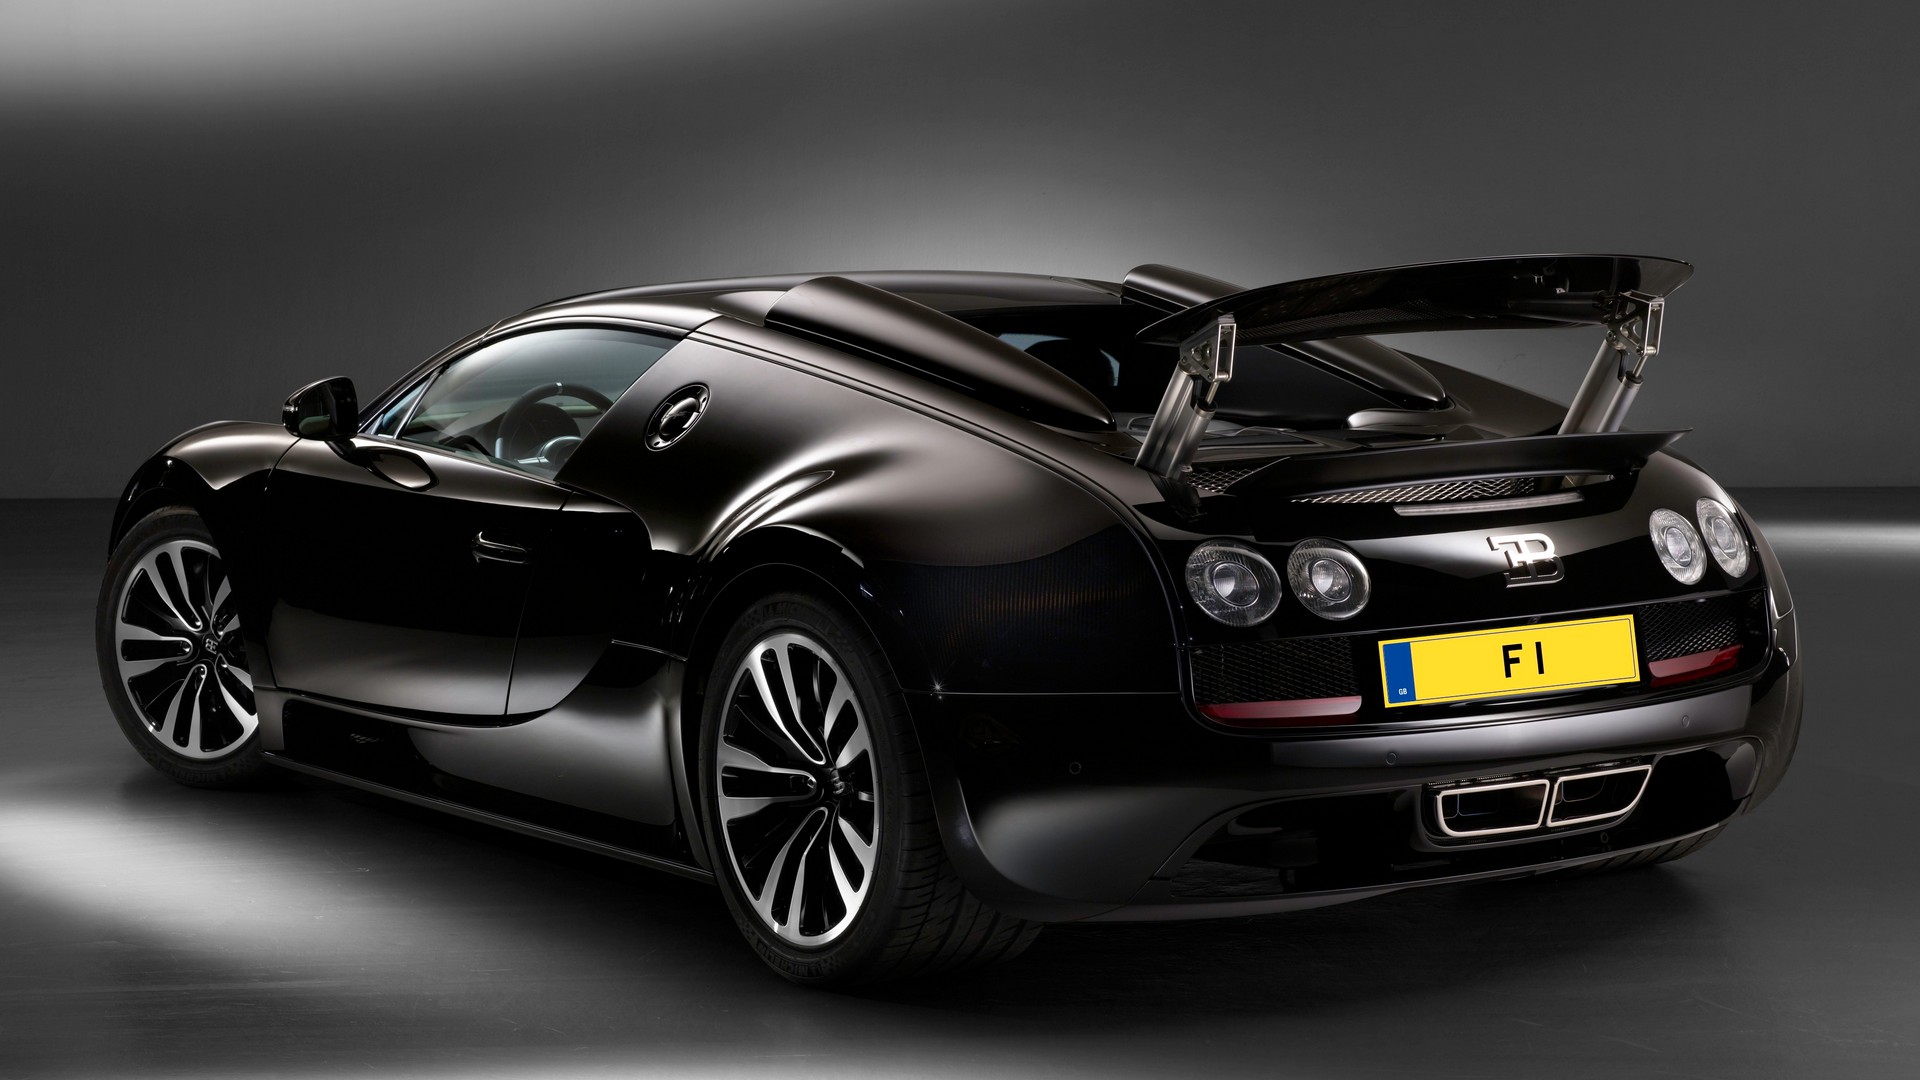 Иллюстрация: Bugatti Veyron Grand Sport Roadster с номером F1